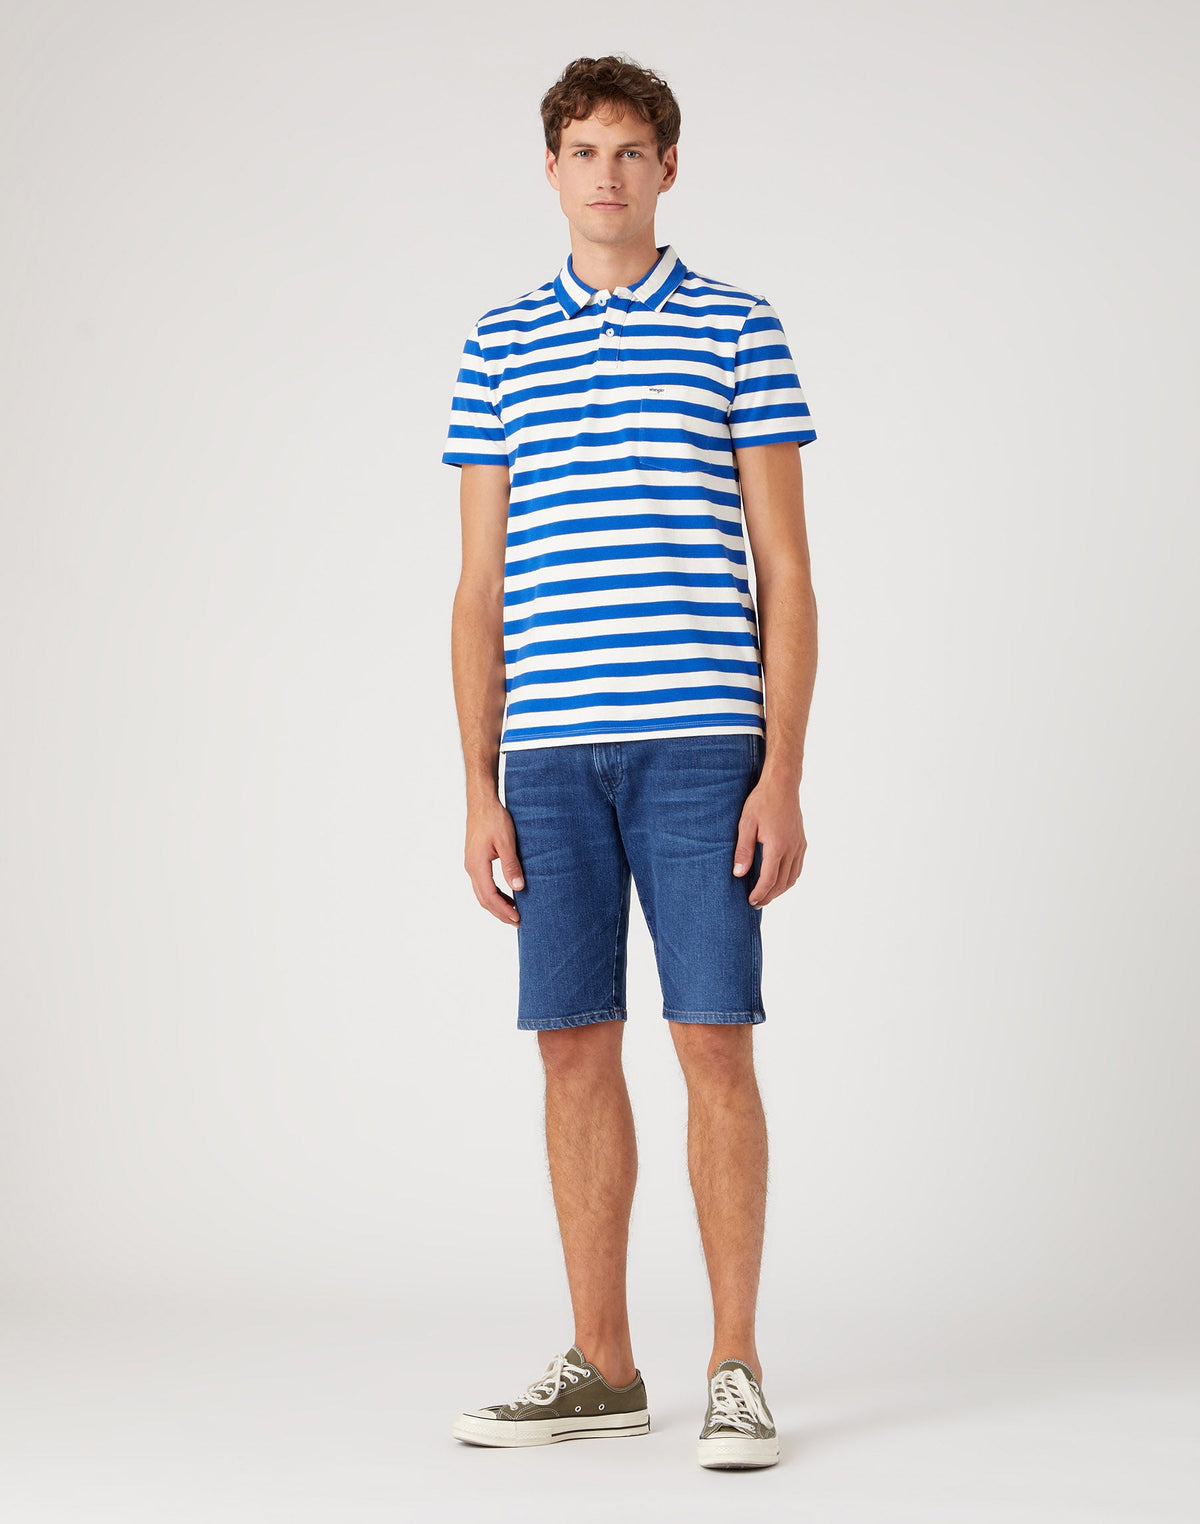 Stripe Polo Shirt in Wrangler Blue